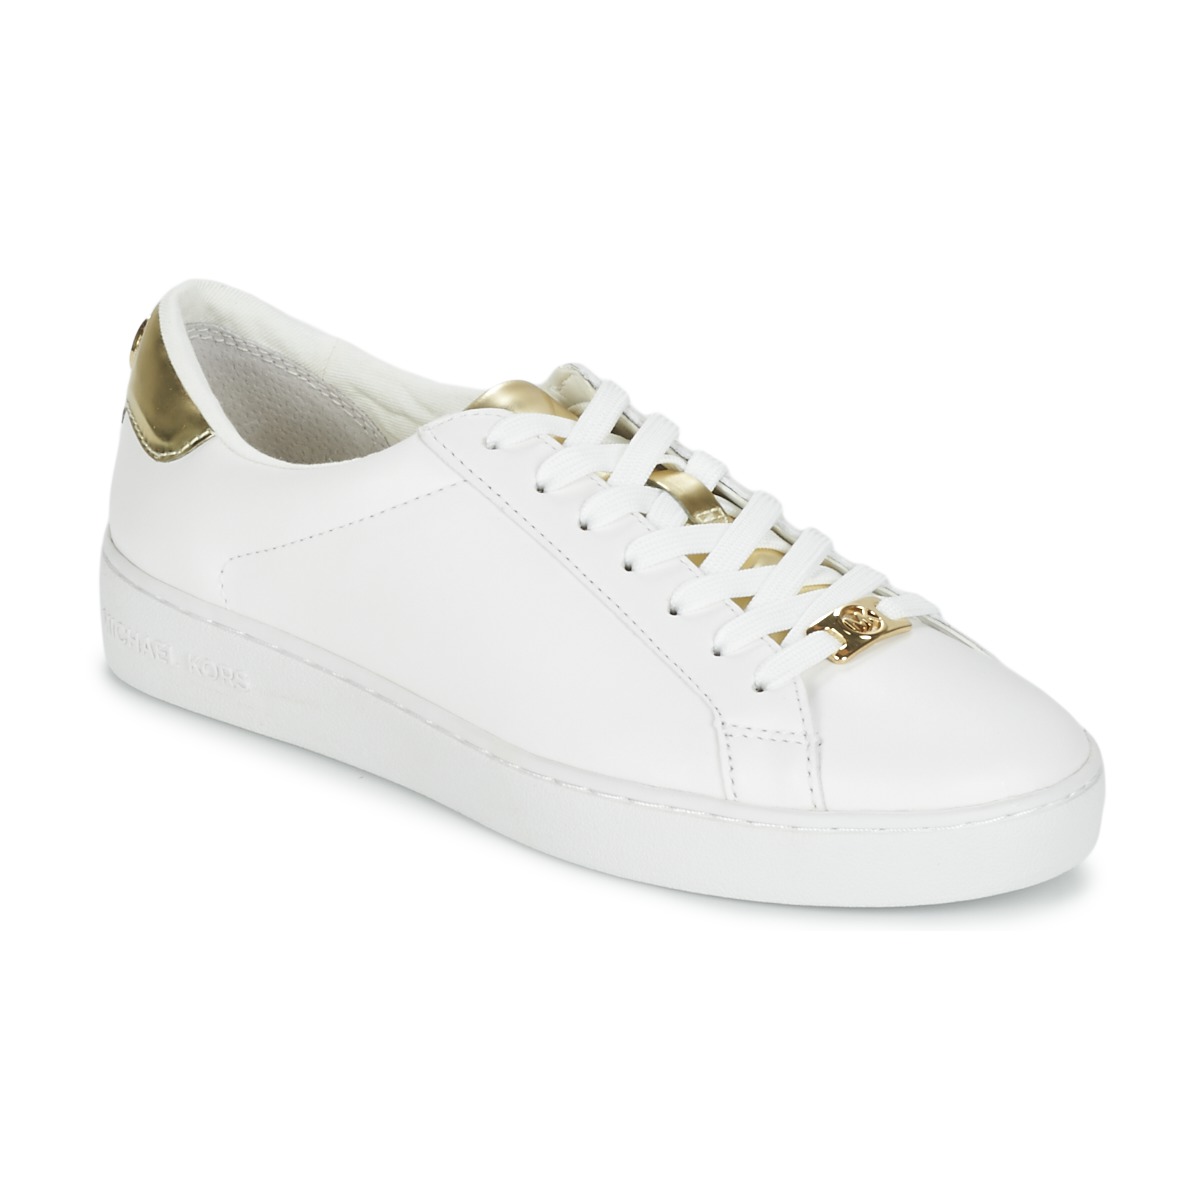 MICHAEL KORS shoes for girls  Gold  Michael Kors shoes MK100650C online  on GIGLIOCOM